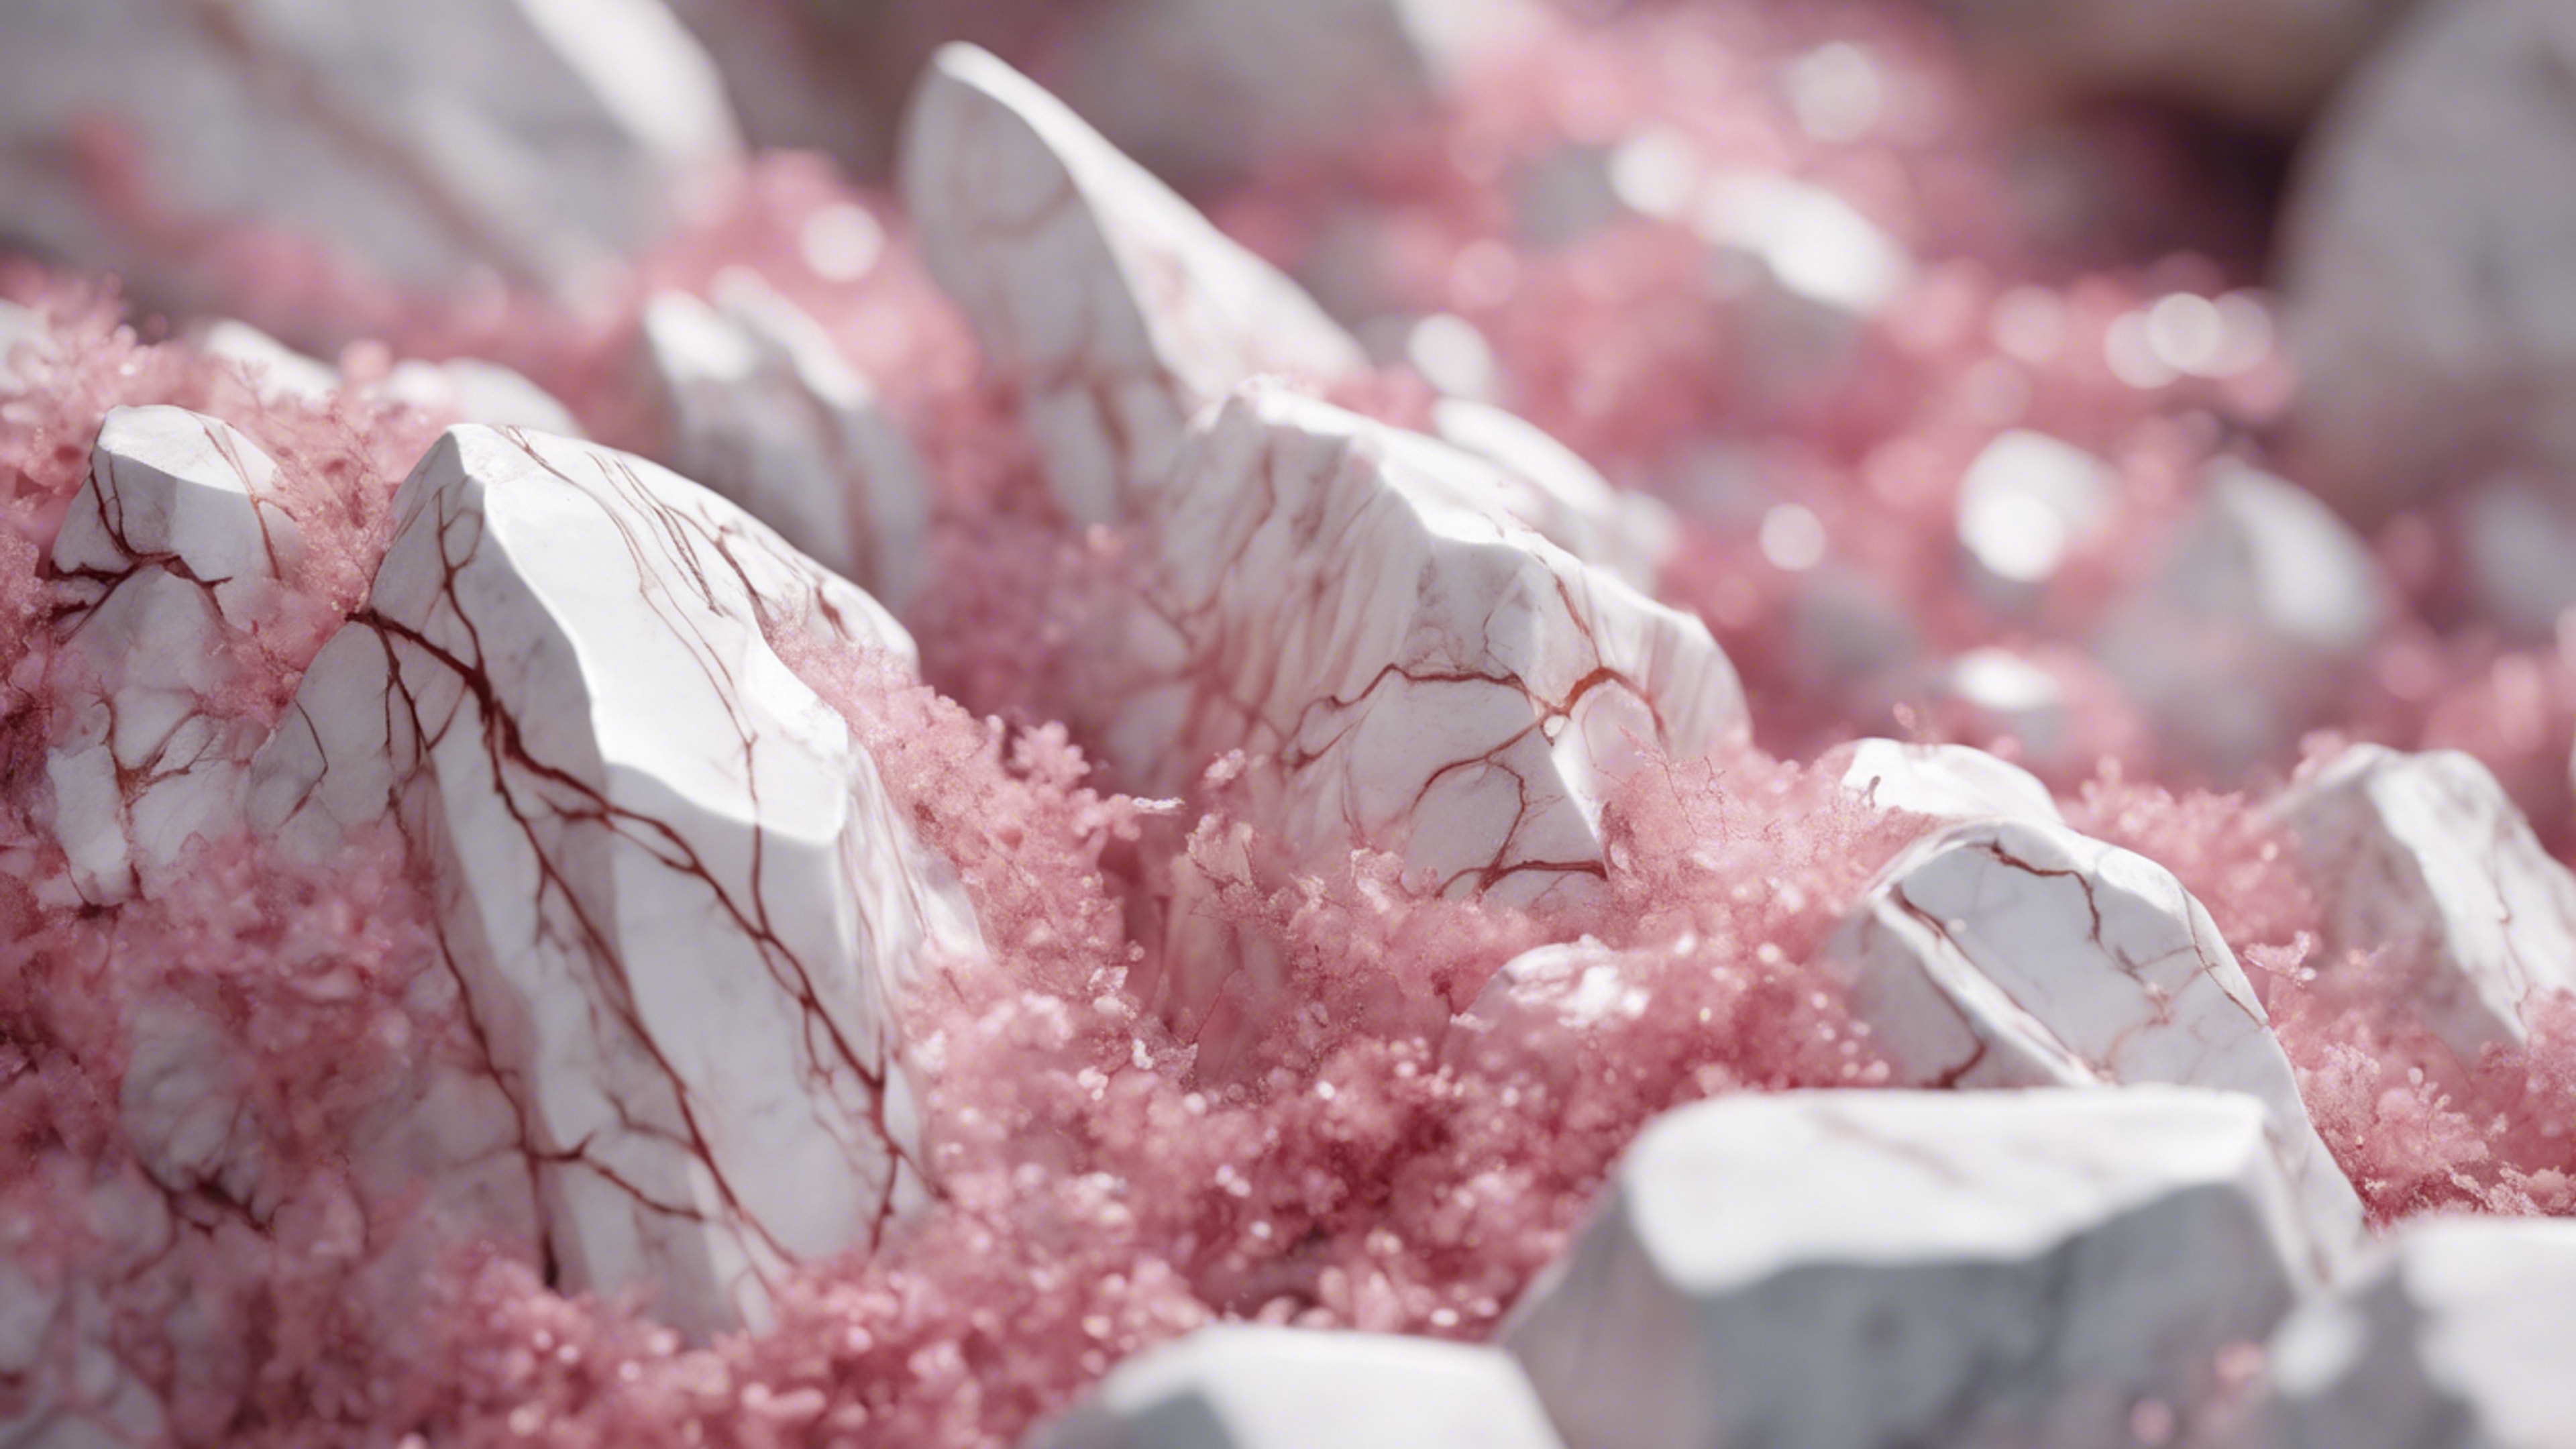 Pink and white veins running through marble rocks.壁紙[3dd5ab4ab8a944e2820c]